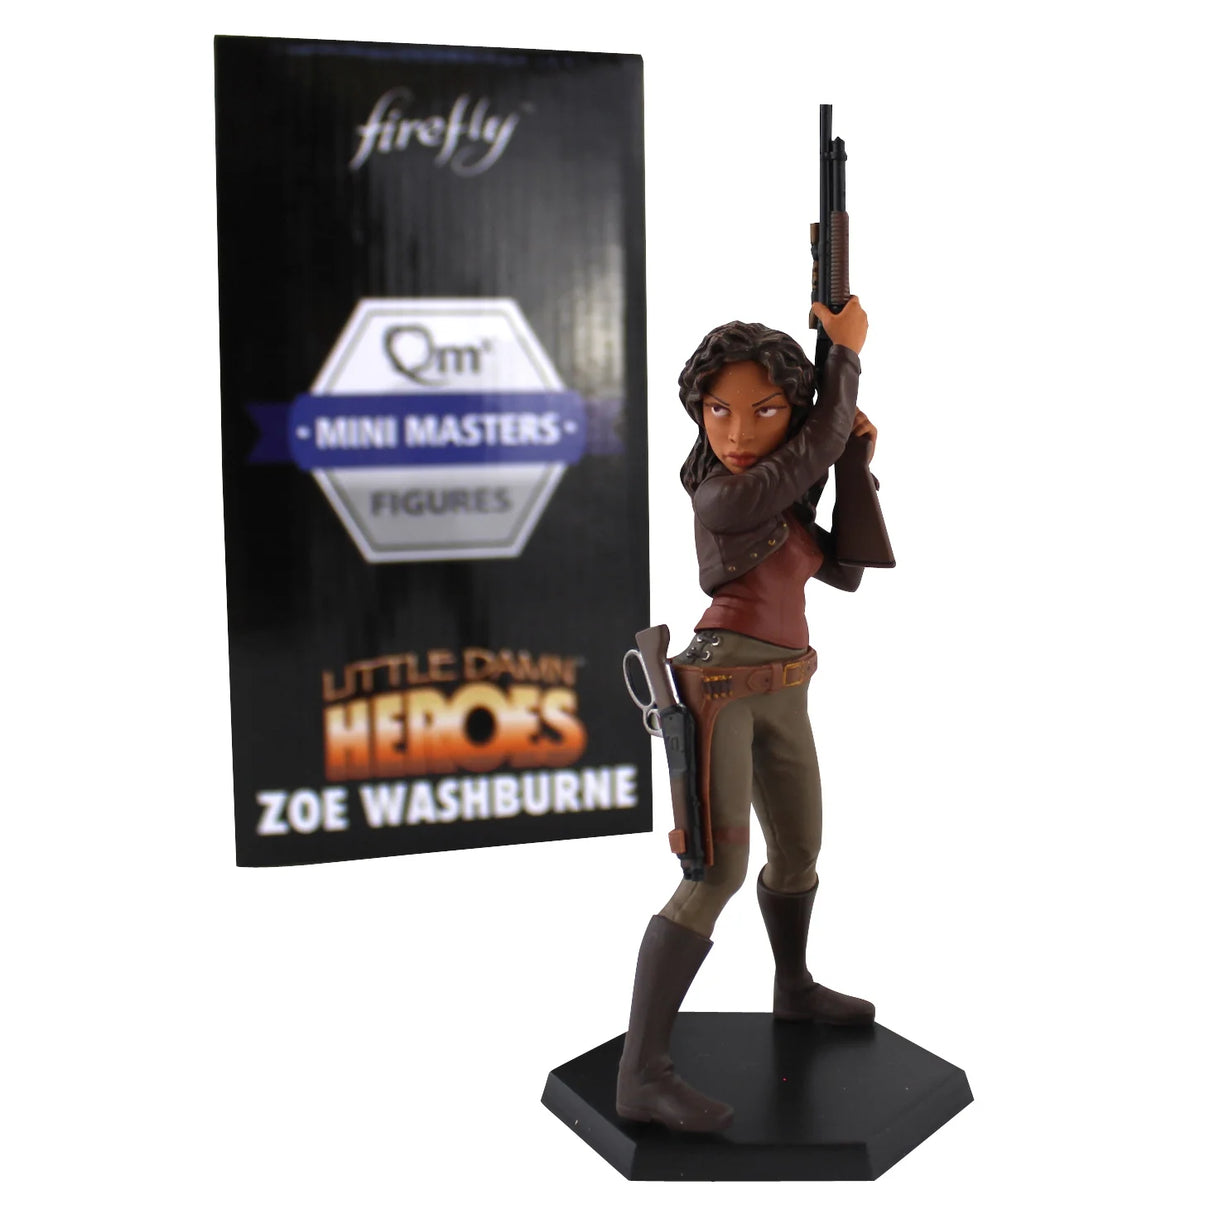 Firefly Zoe Washburne QMX Mini Masters Figurine